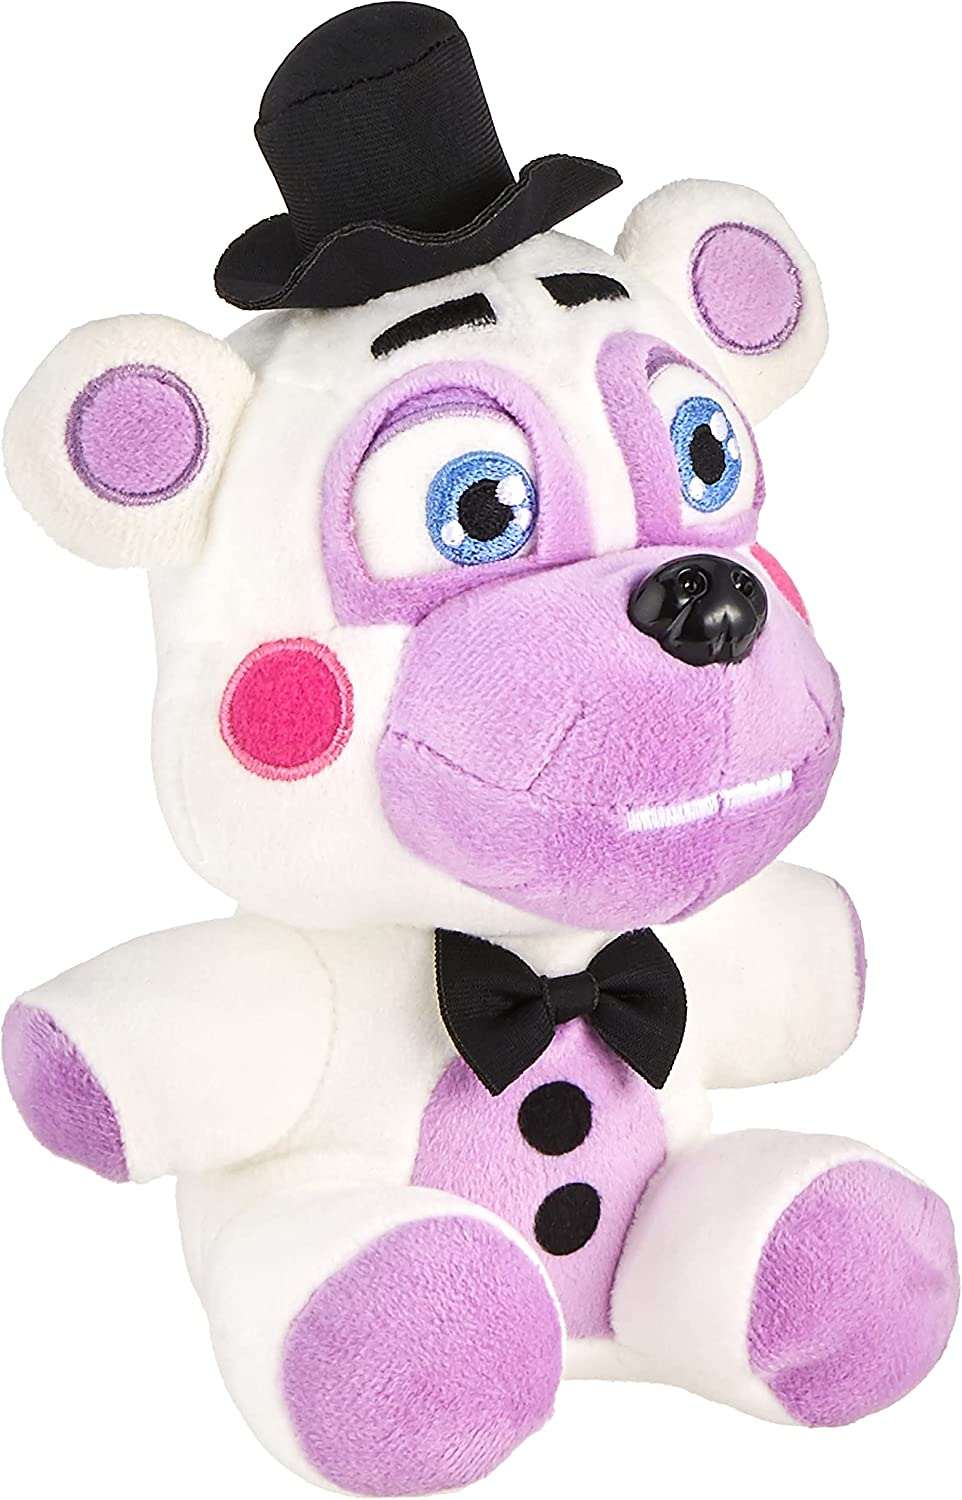 Five Nights at Freddy's Plushie Pizza Stimulator FNAF Plush Toy Stuffed  Doll Toy